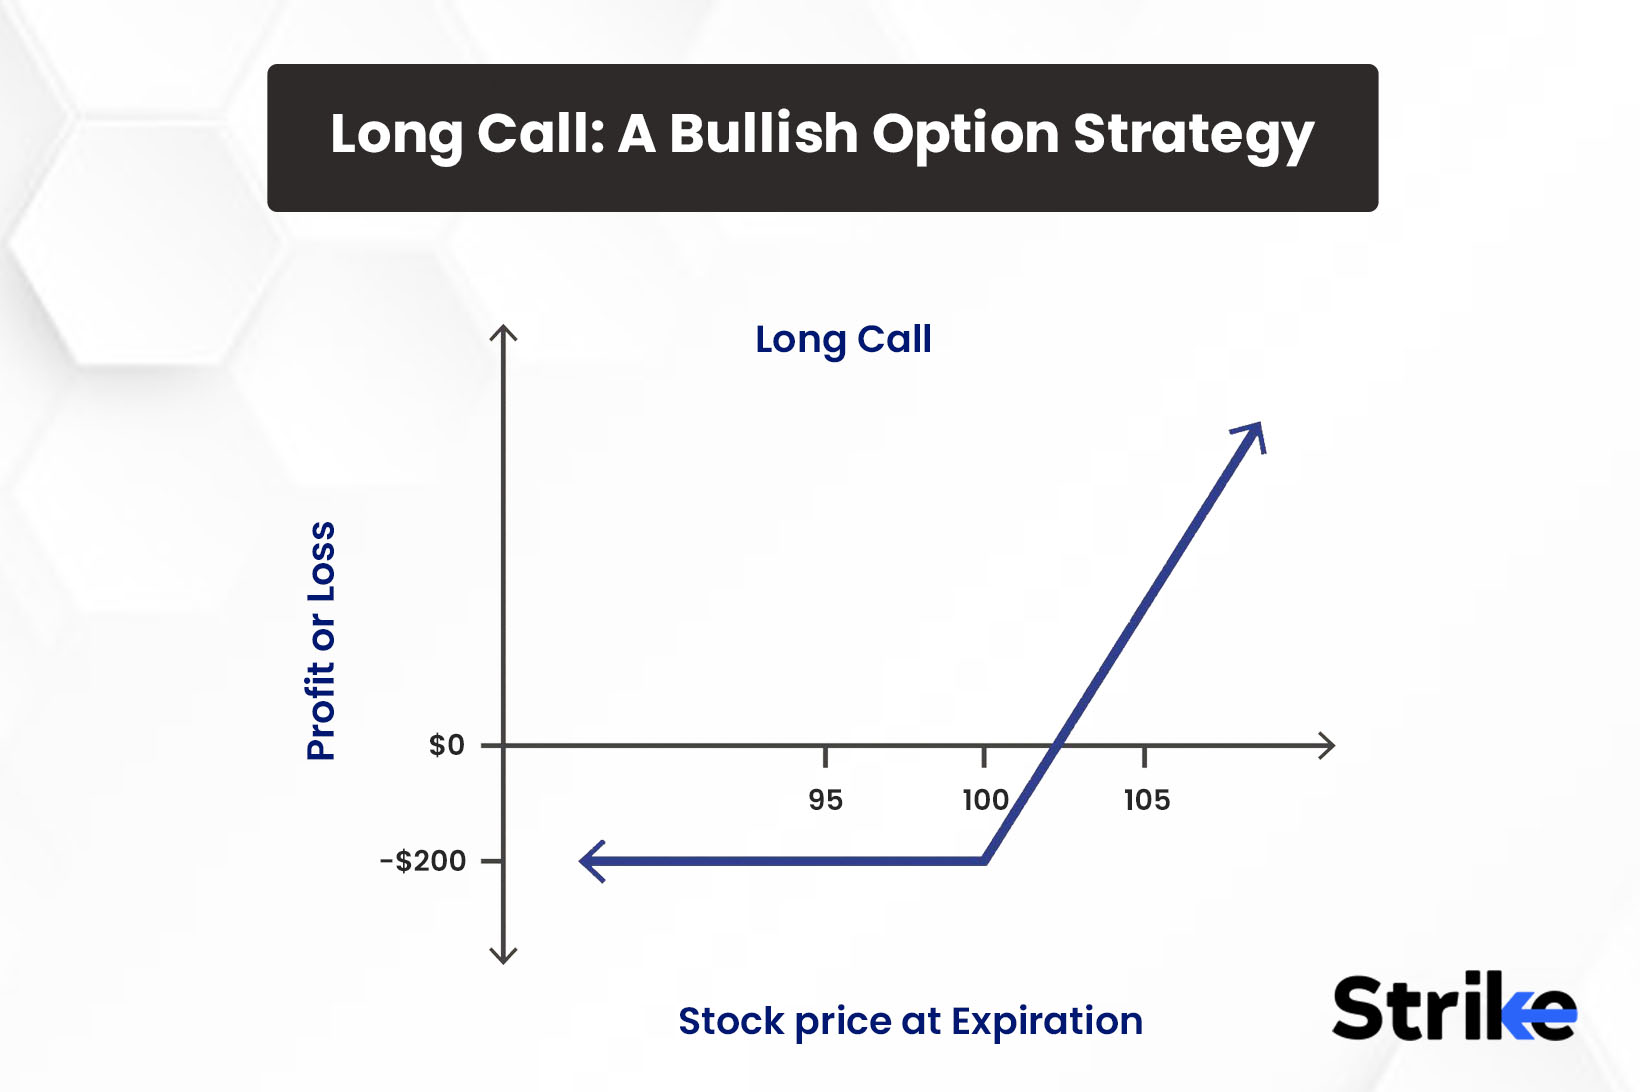 Long Call: A Bullish Option Strategy